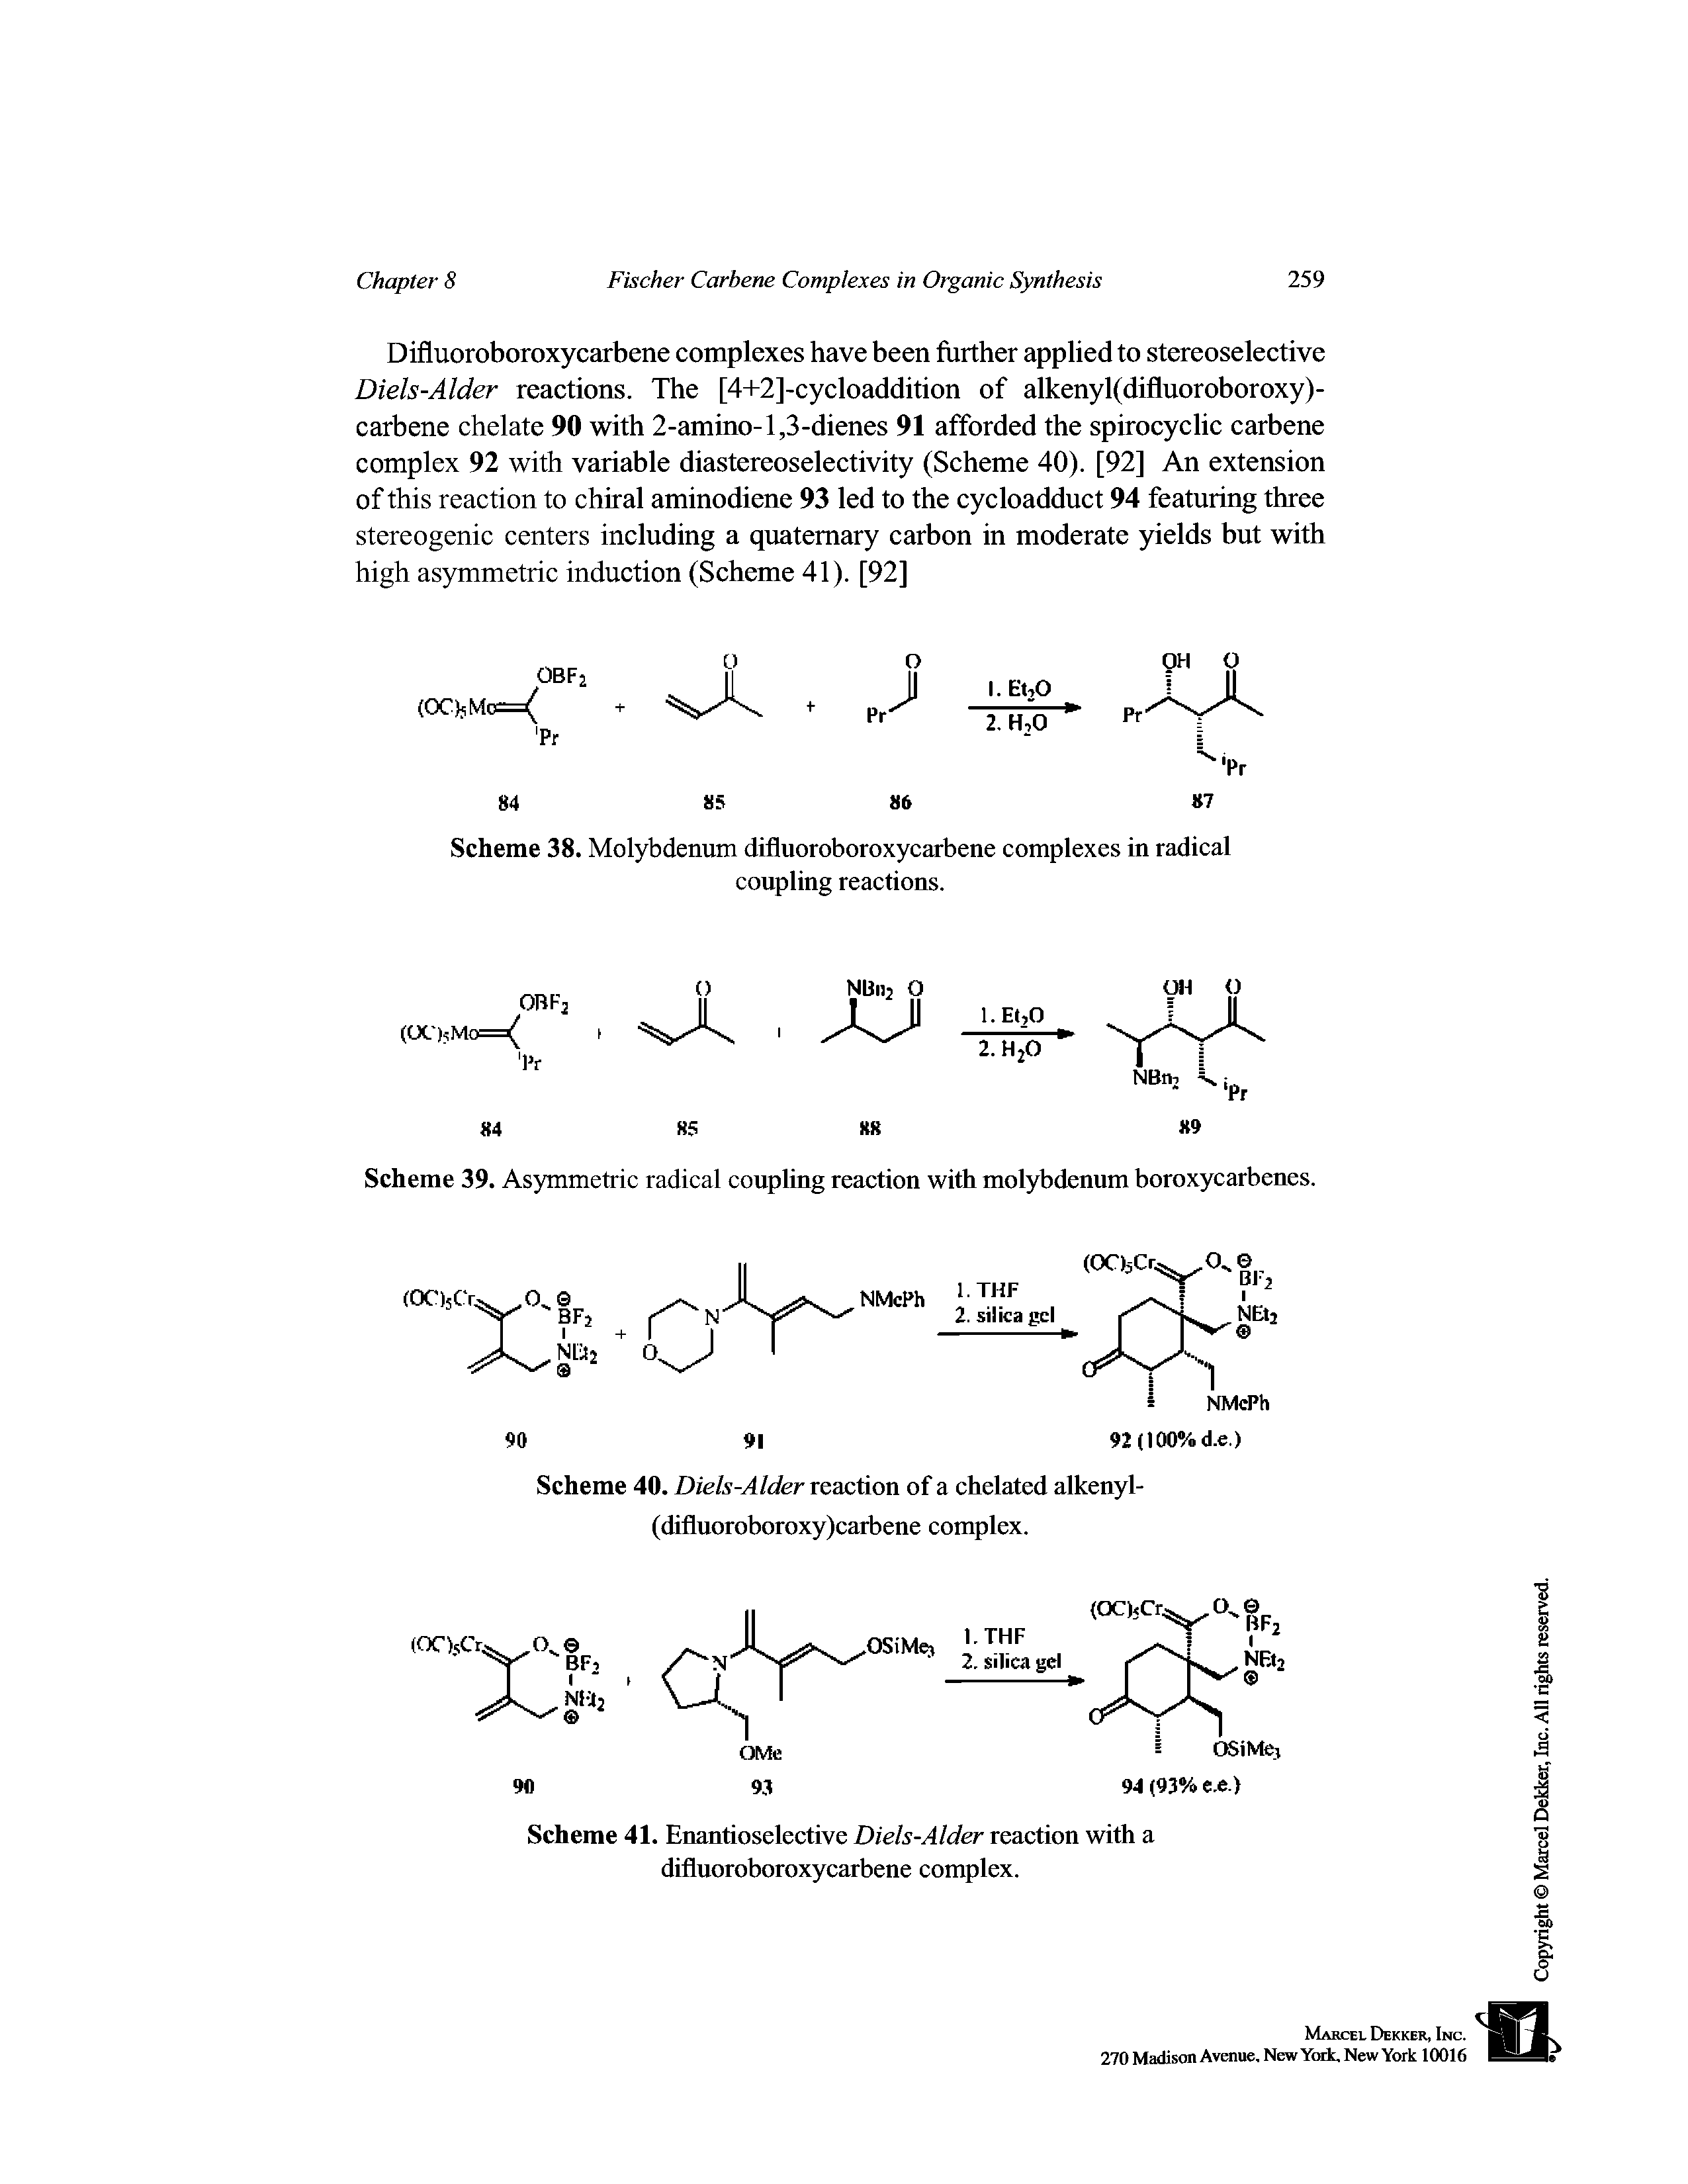 Scheme 39. Asymmetric radical coupling reaction with molybdenum boroxycarbenes.